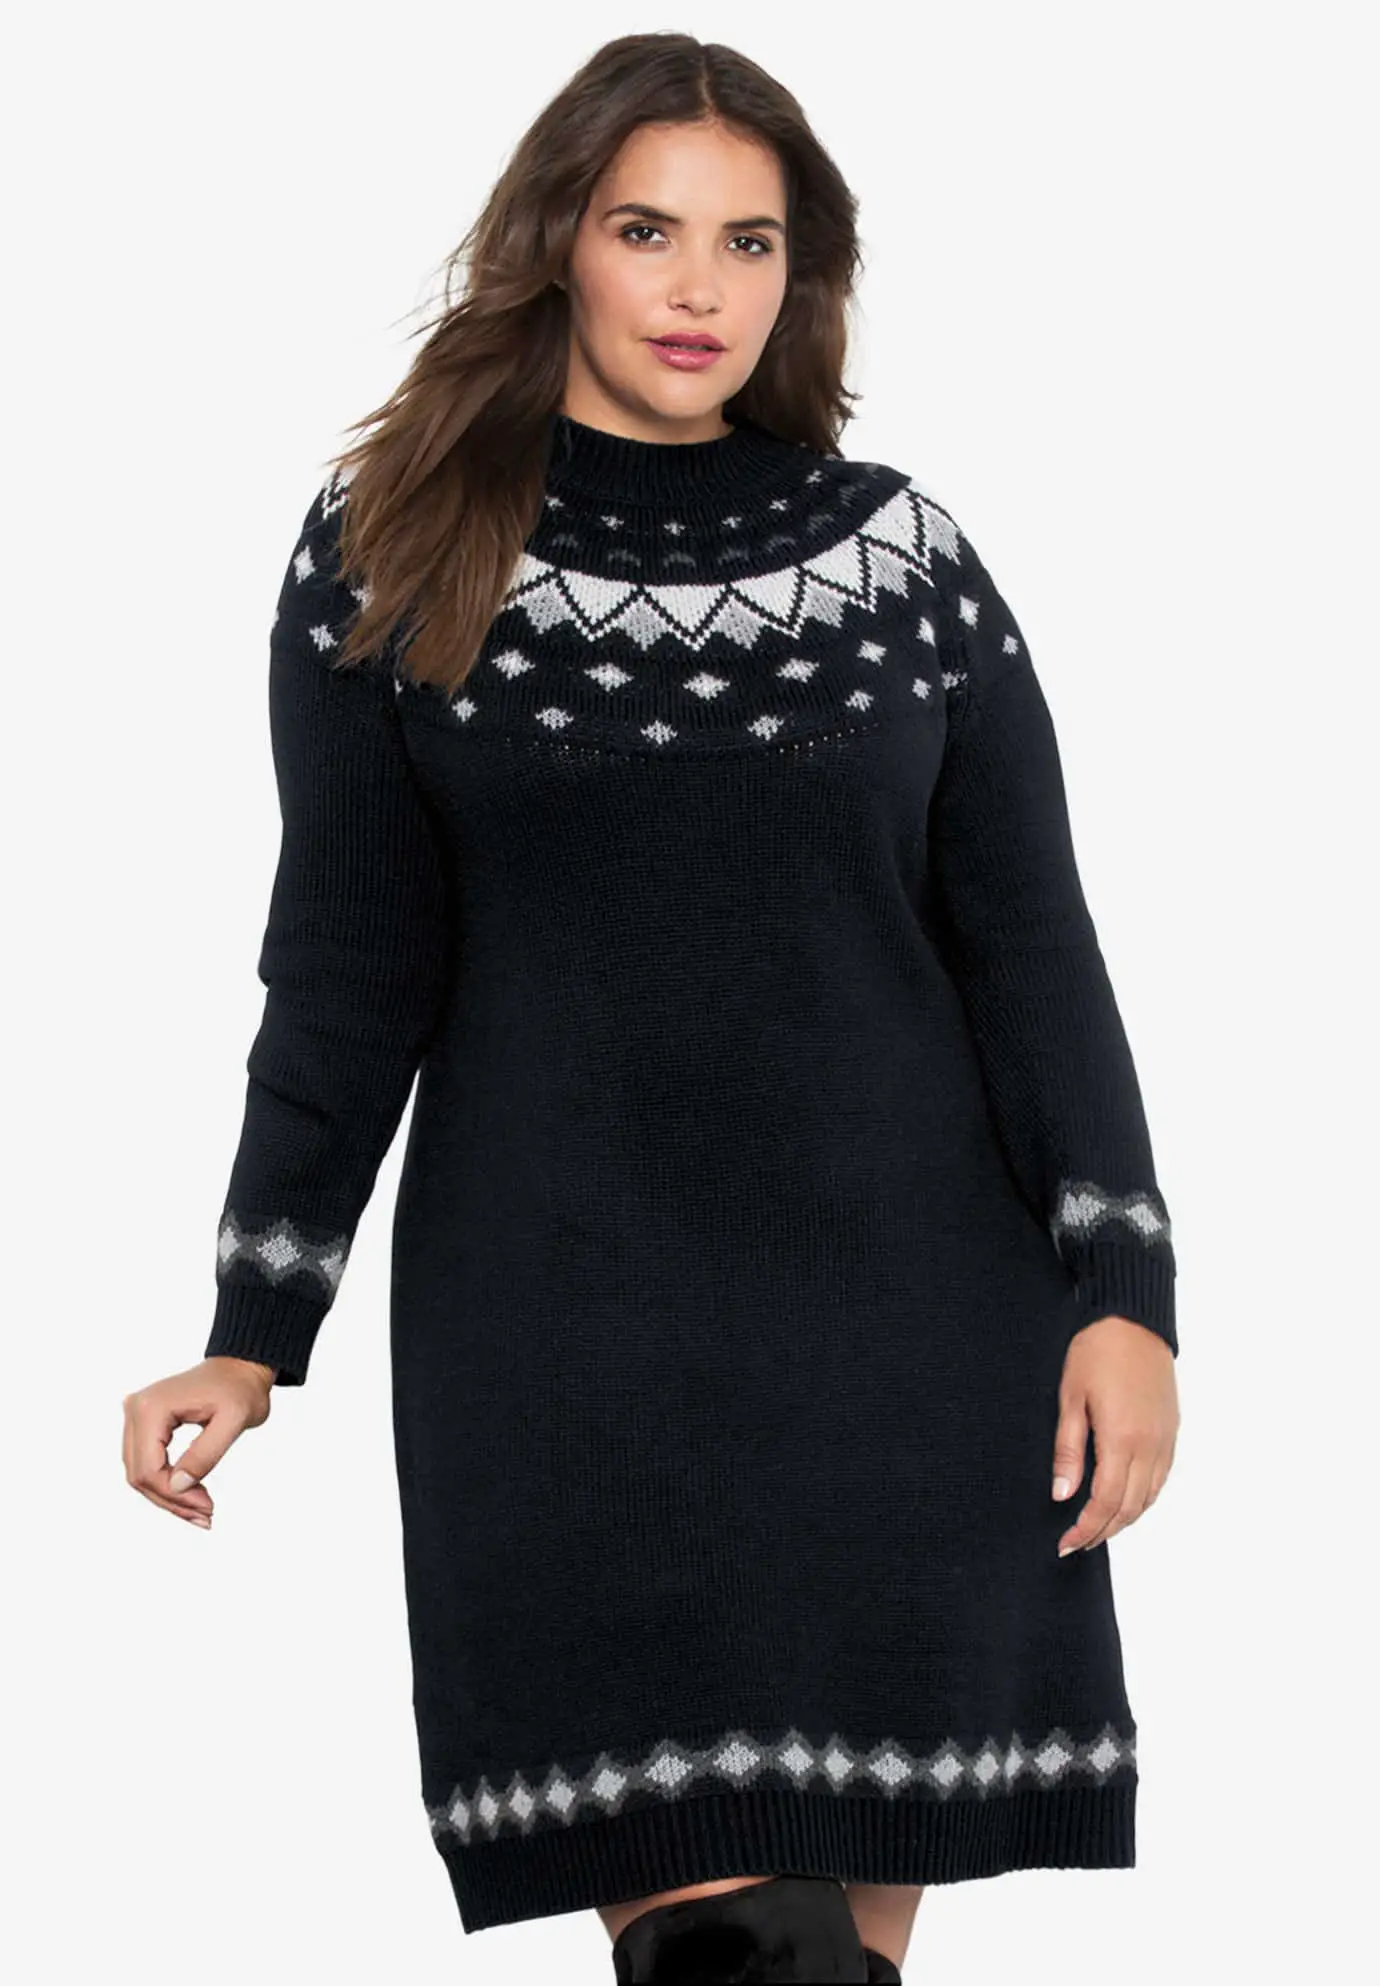 Plus Size Sweater Dress 03